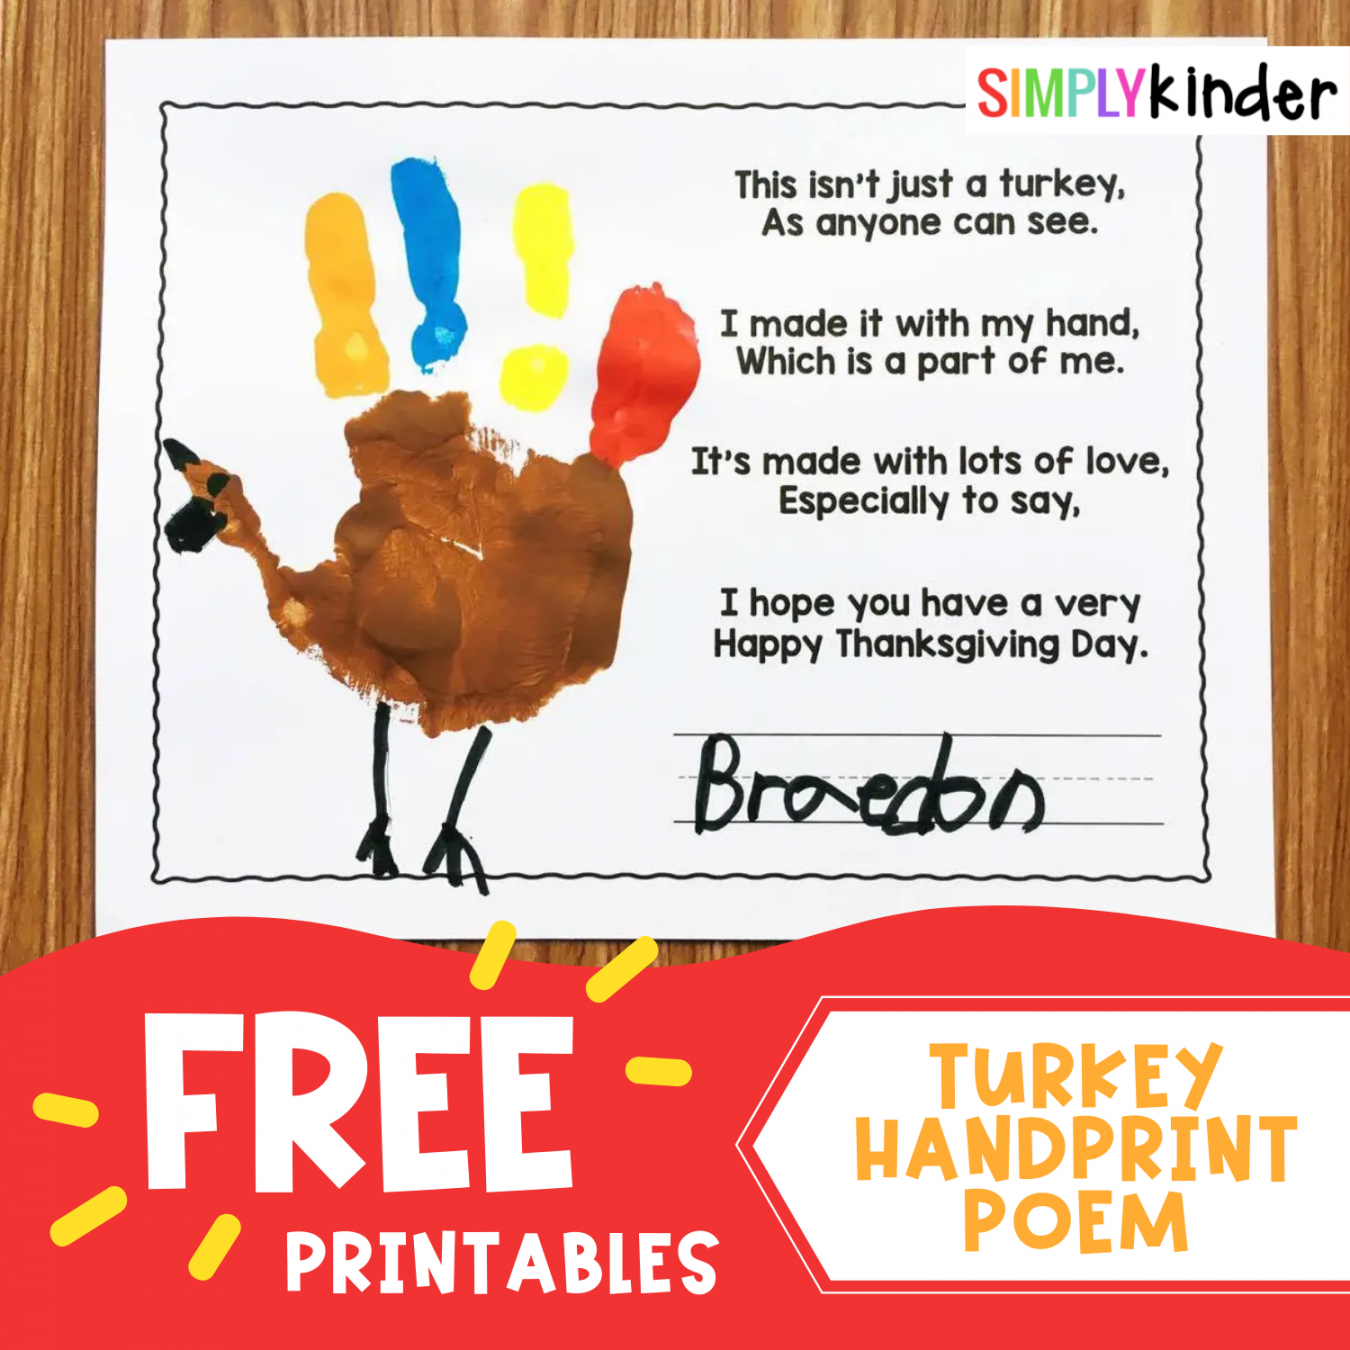 Free Turkey Handprint Poem - Simply Kinder - FREE Printables - Free Printable Turkey Handprint Poem Printable